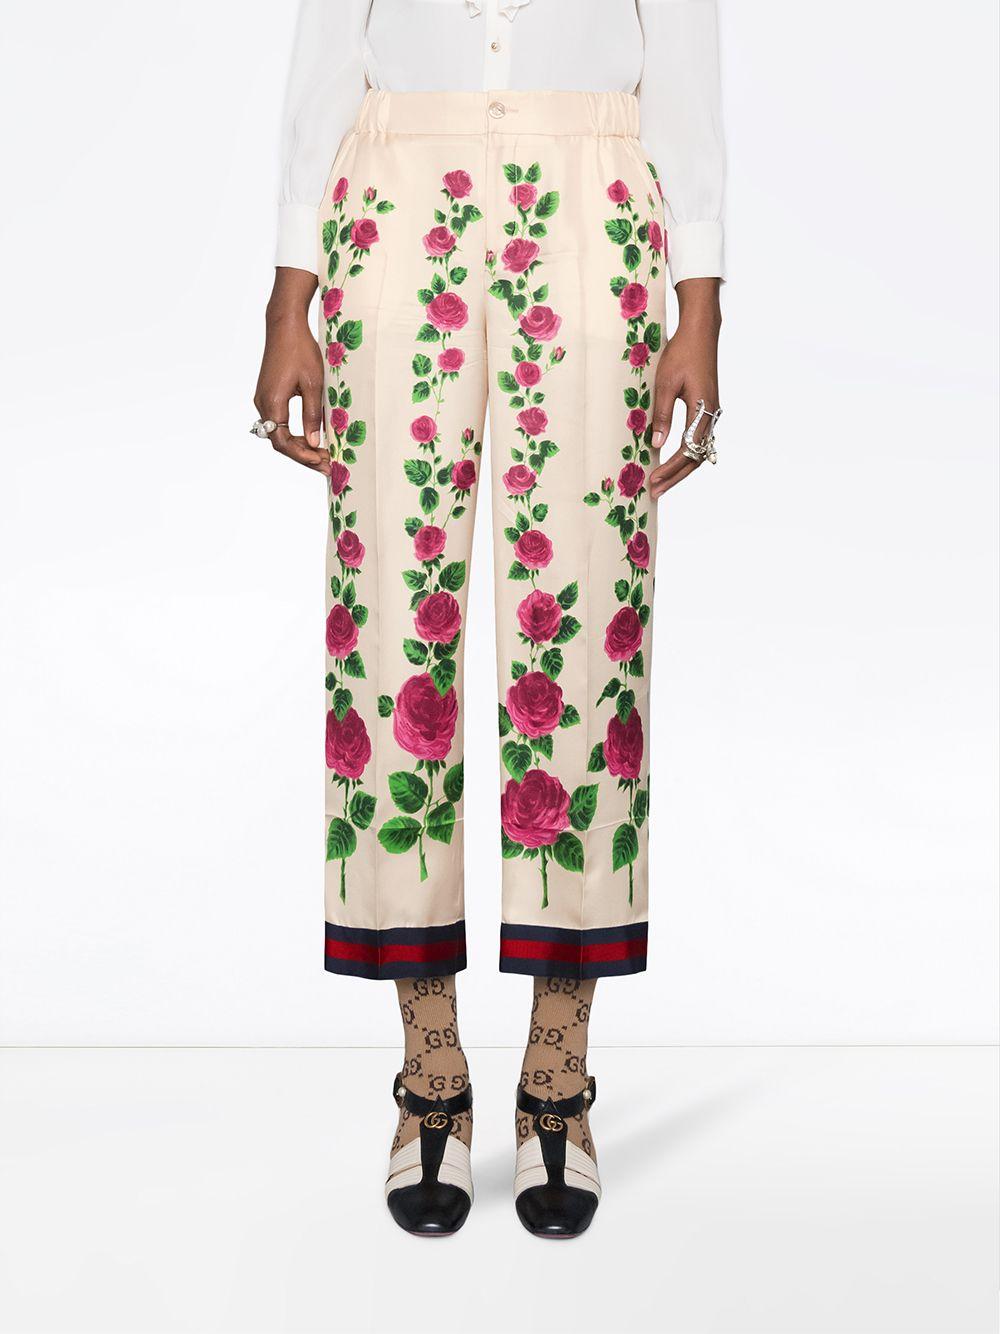 Gucci Floral Silk Silk Pajamas - Pink Loungewear, Clothing - GUC1134623